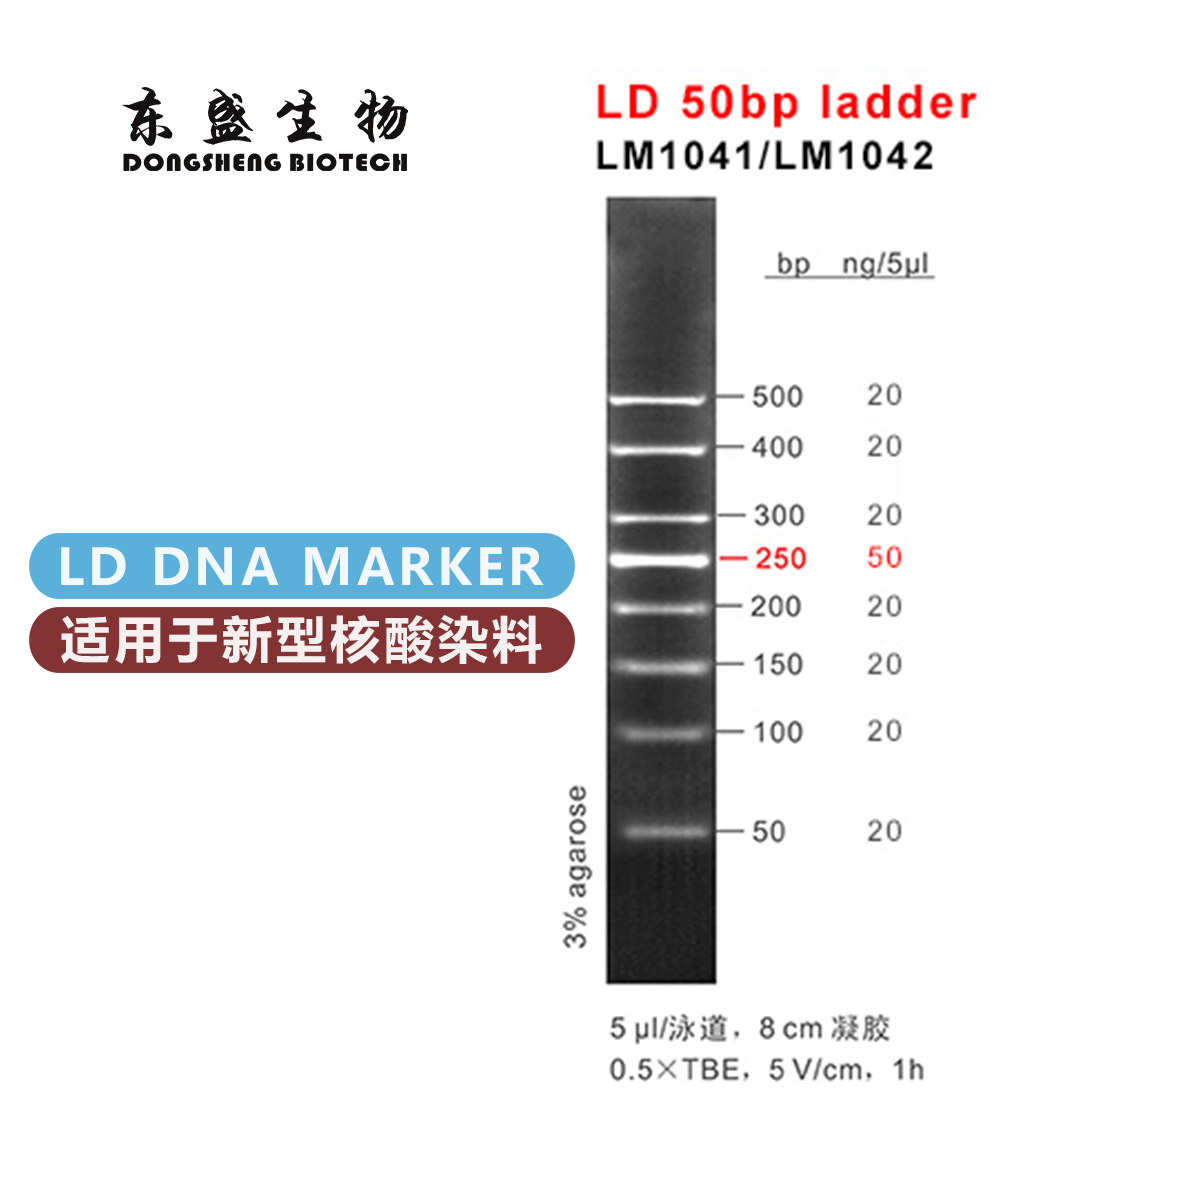 东盛LD 50bp ladder 新型染料专用DNA Marker (LM1041-LM1042)